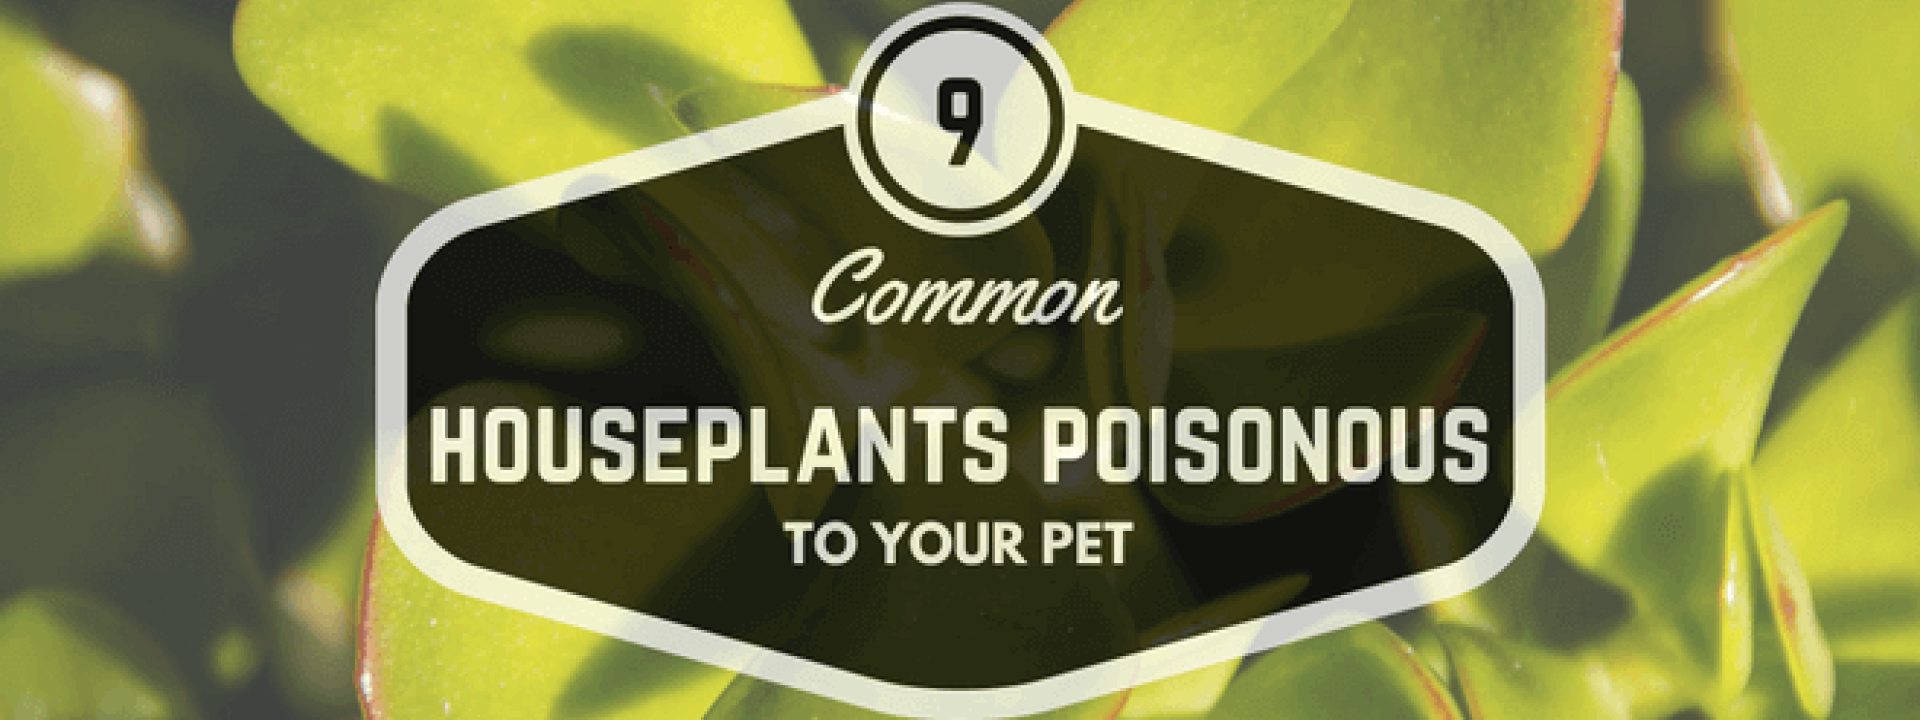 blog-title-9-common-houseplants-poisonous-to-your-pet.png